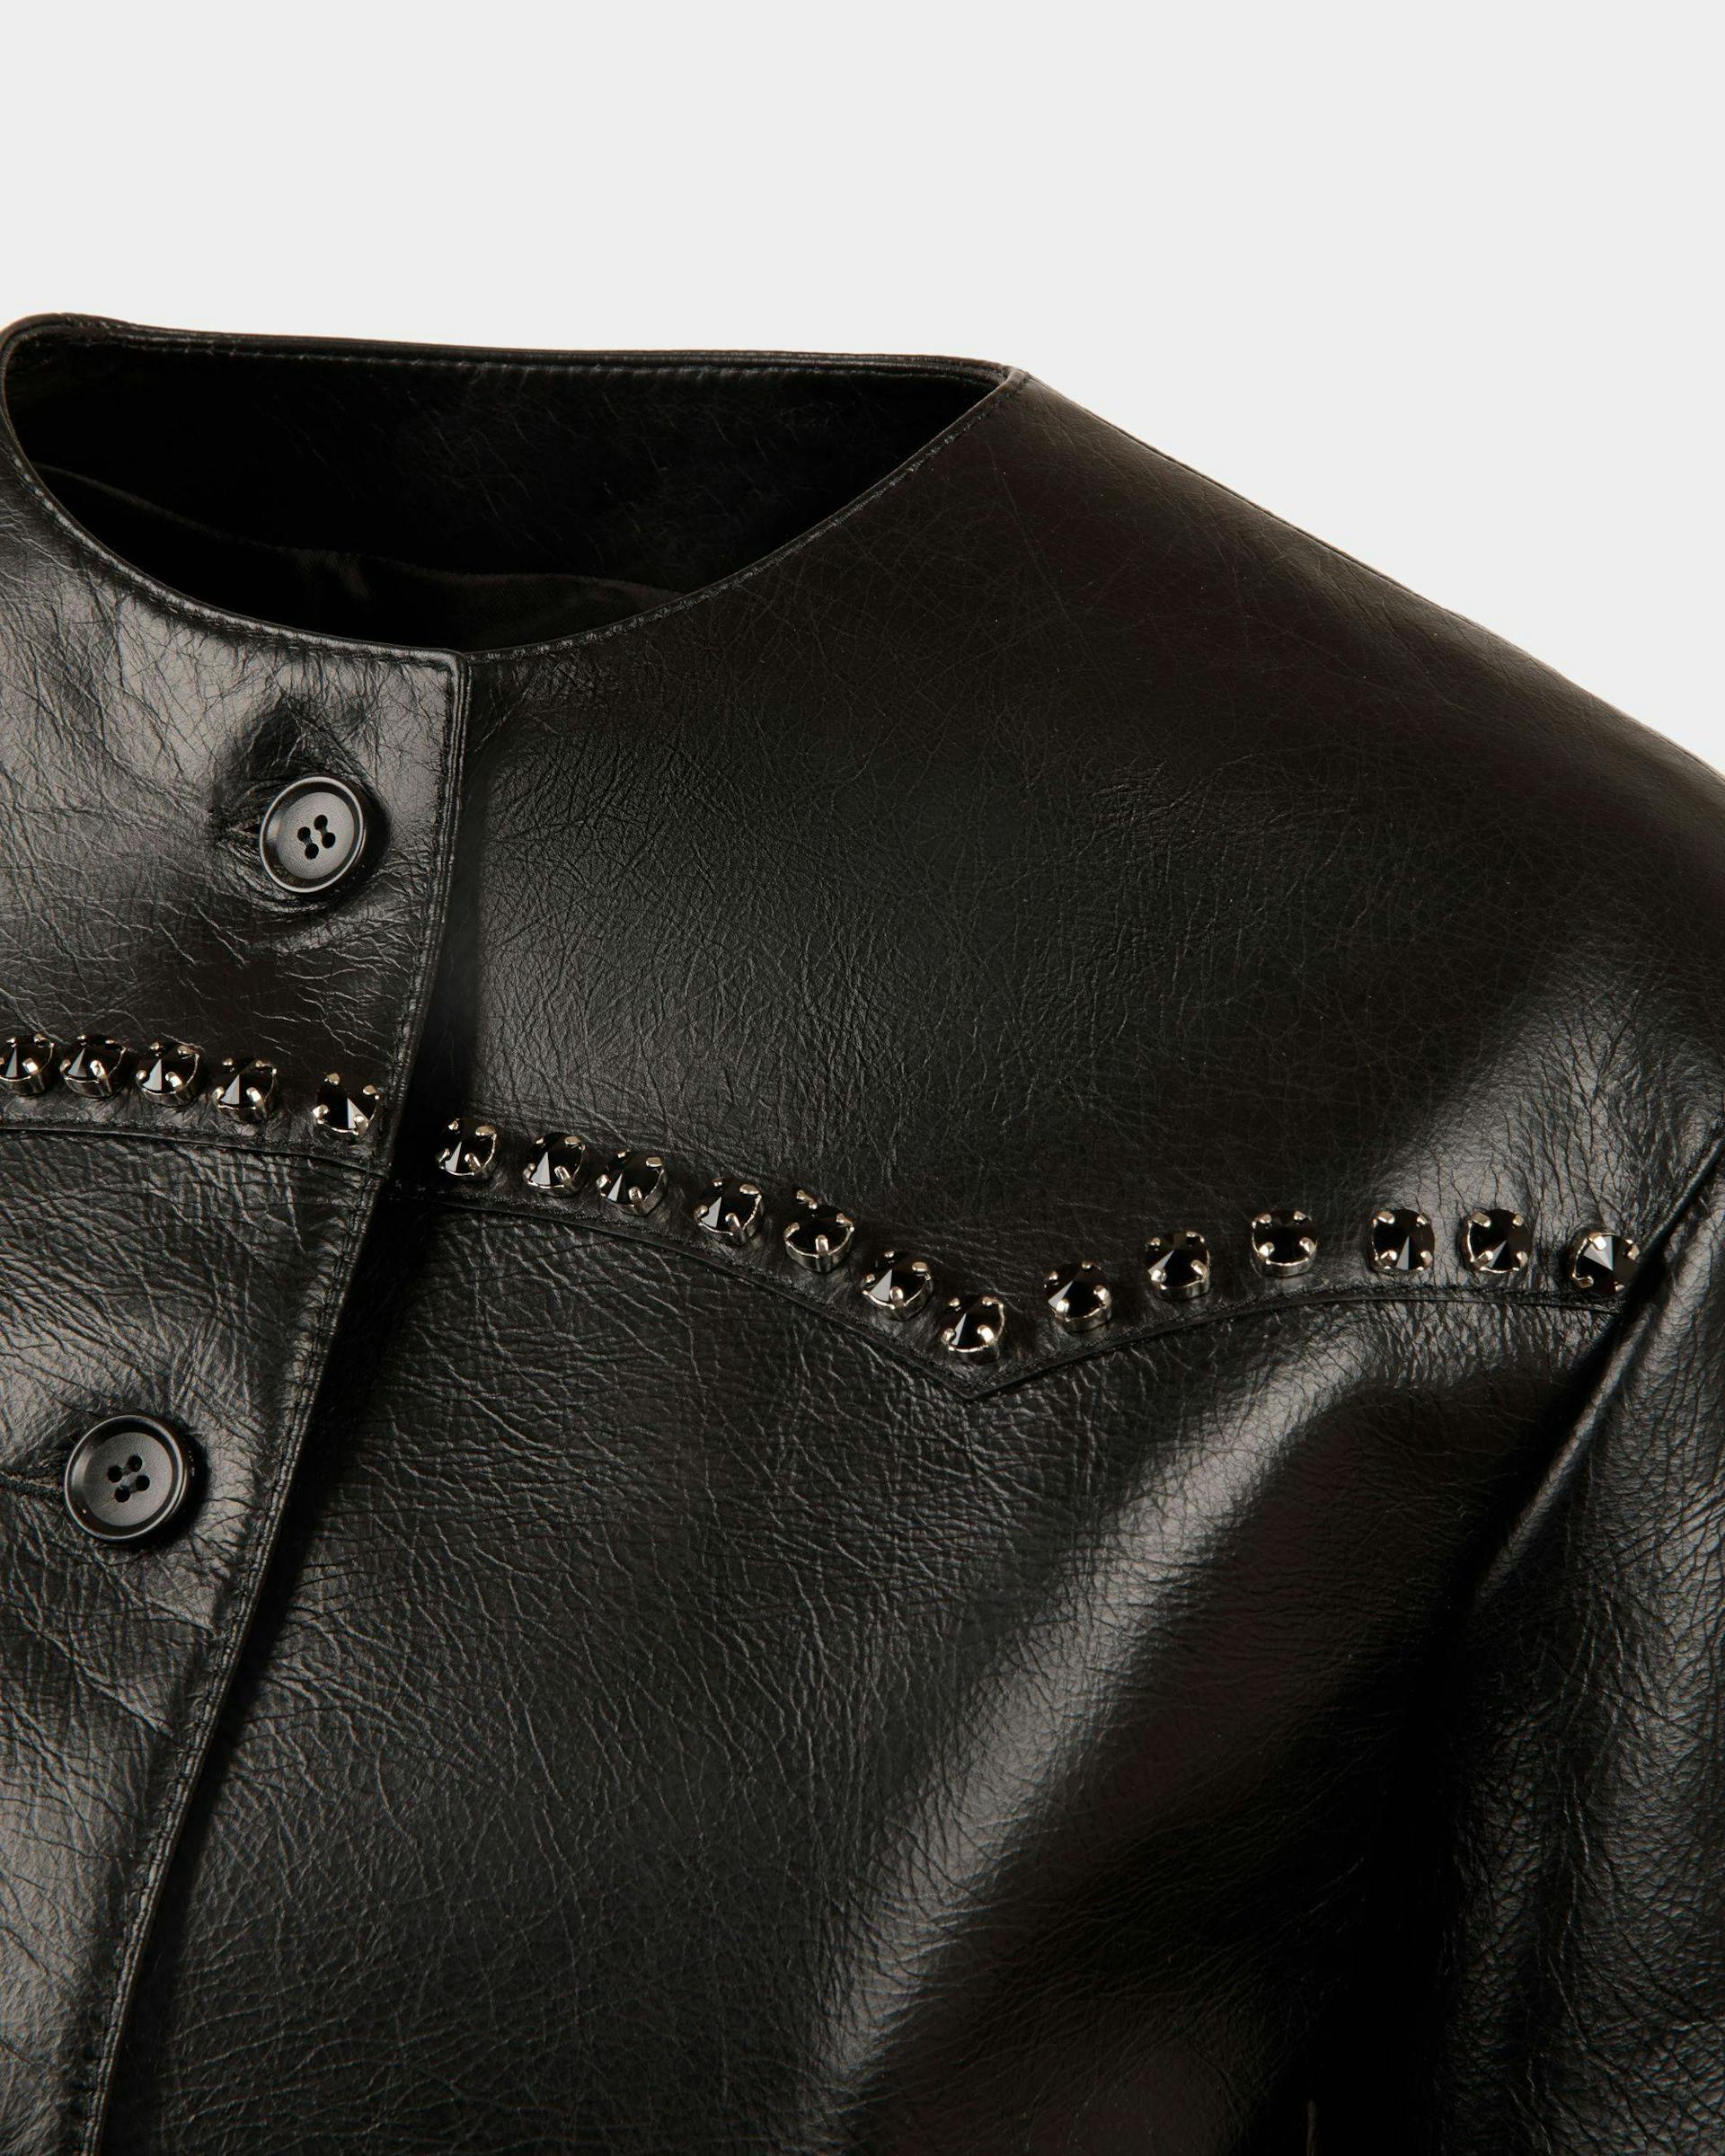 Jacket in Black Leather - Women's - Bally - 02